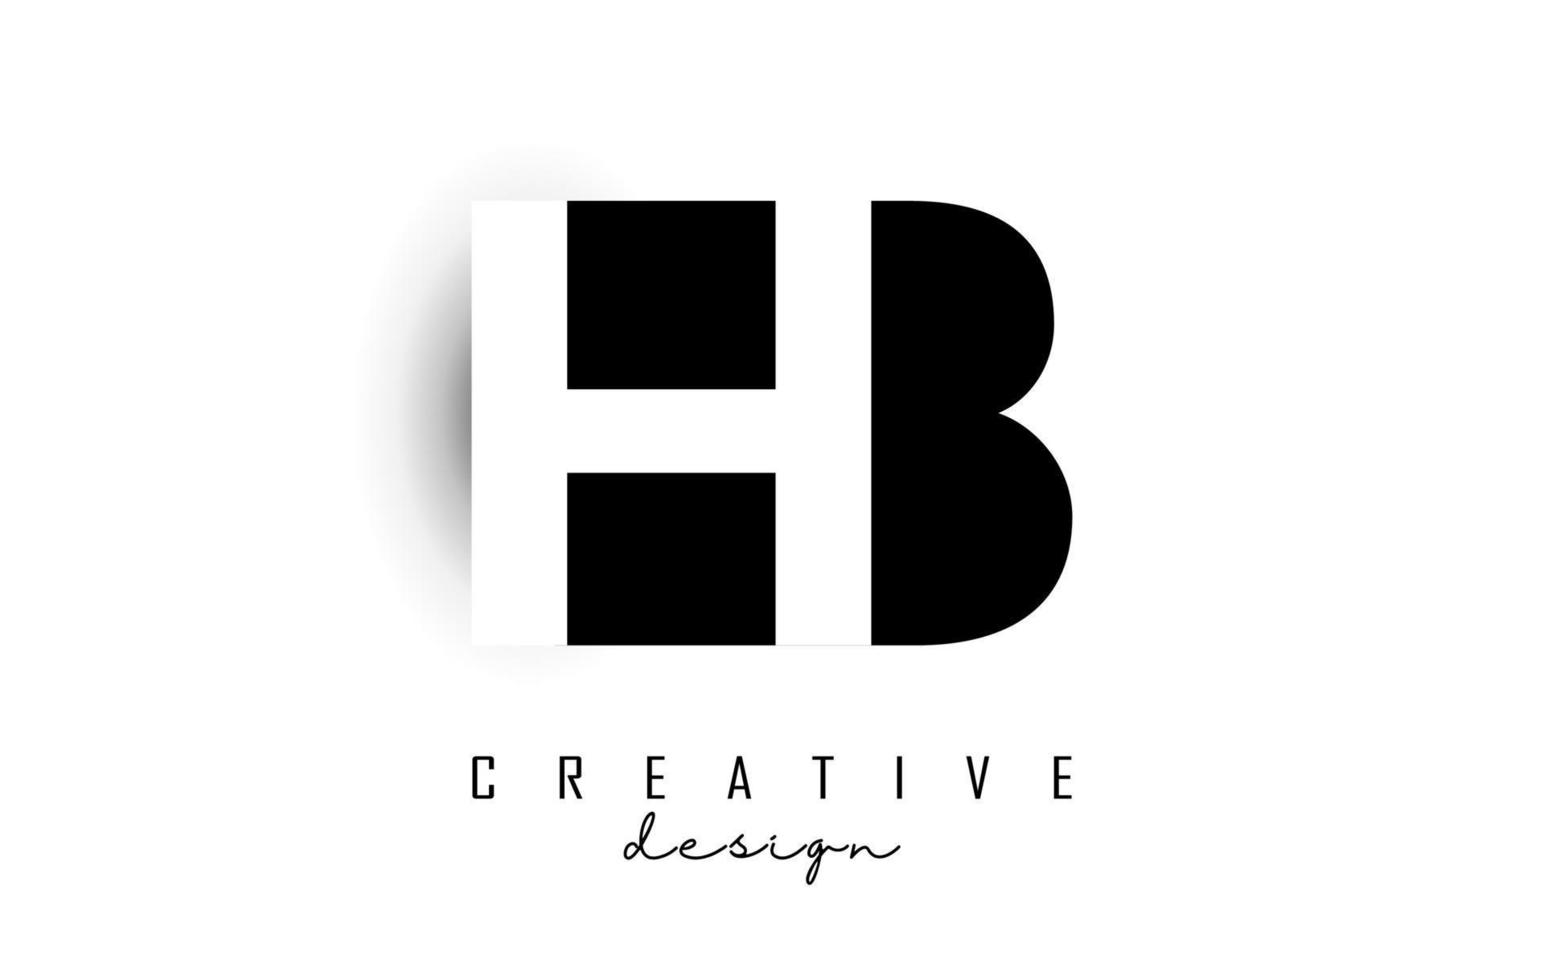 hb bokstäver logotyp med negativ utrymme design. vektor illustration med med geometrisk typografi.